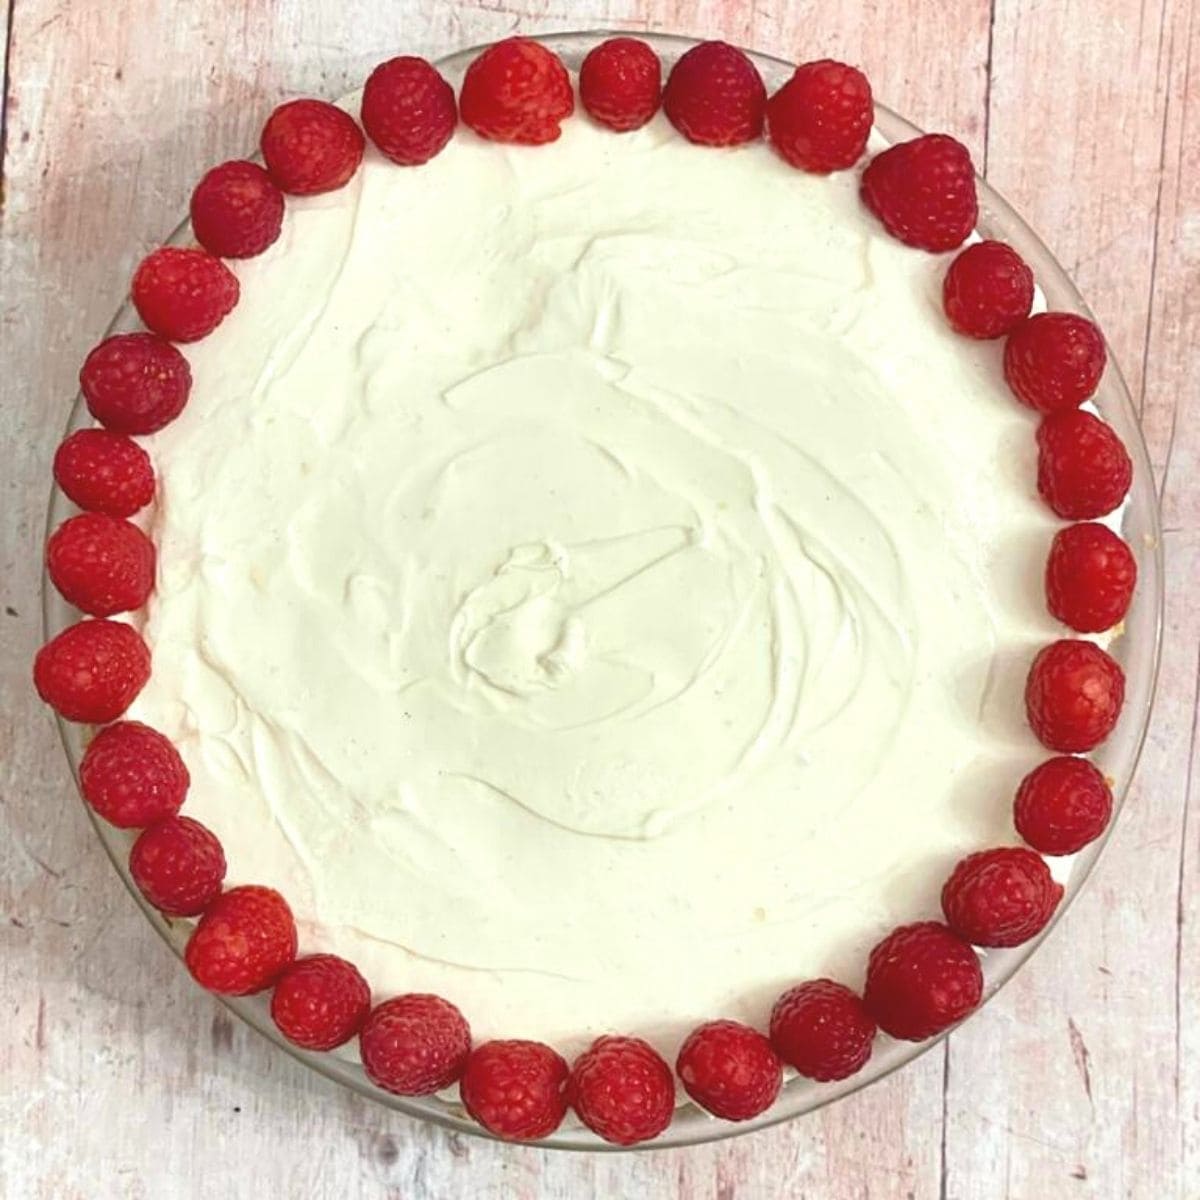 Lemon cheesecake decorated with raspberries